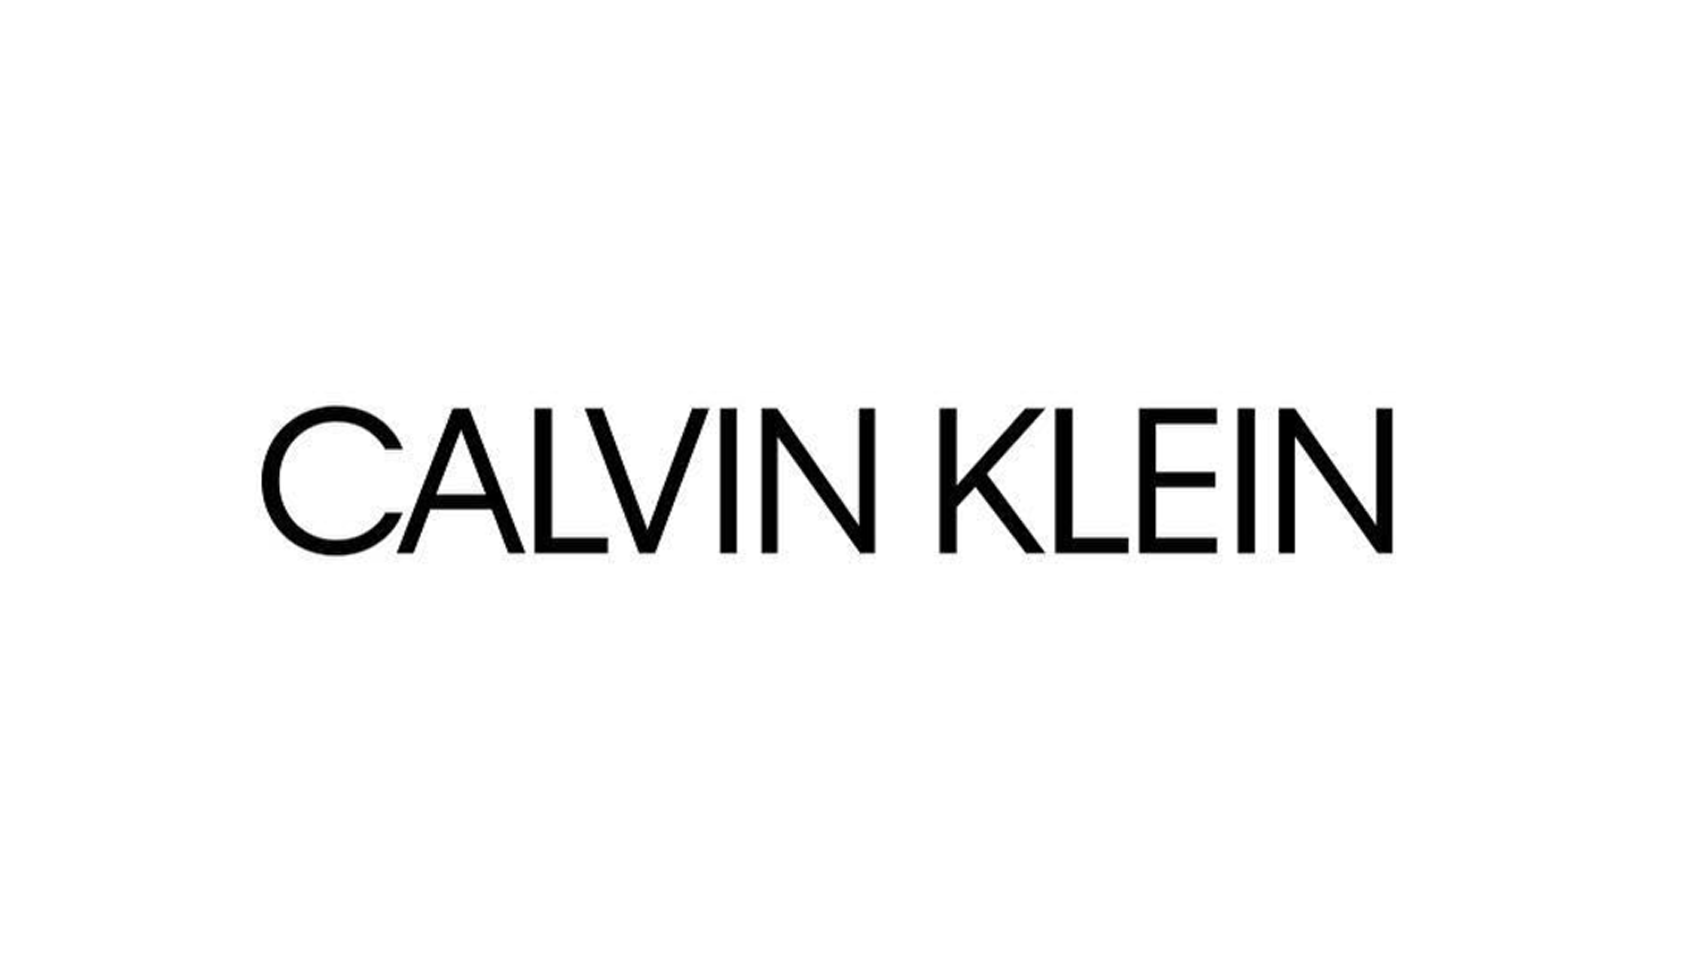 Calvin Logo - Raf Simons and Peter Saville subtly redesign iconic Calvin Klein logo